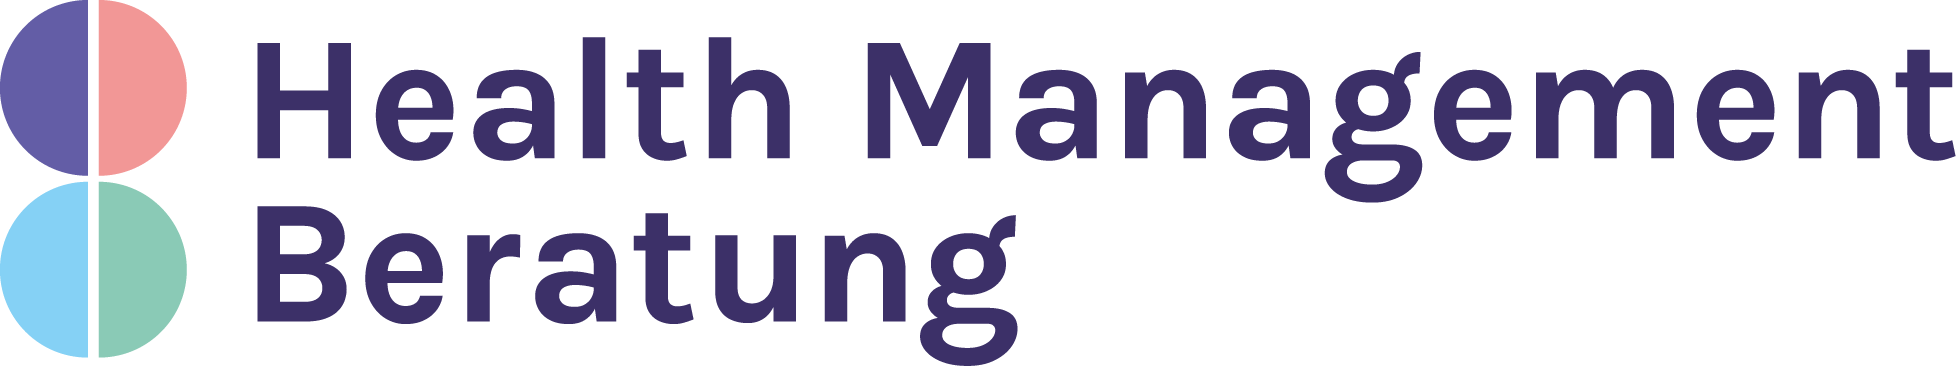 8-health-management-logo-groß